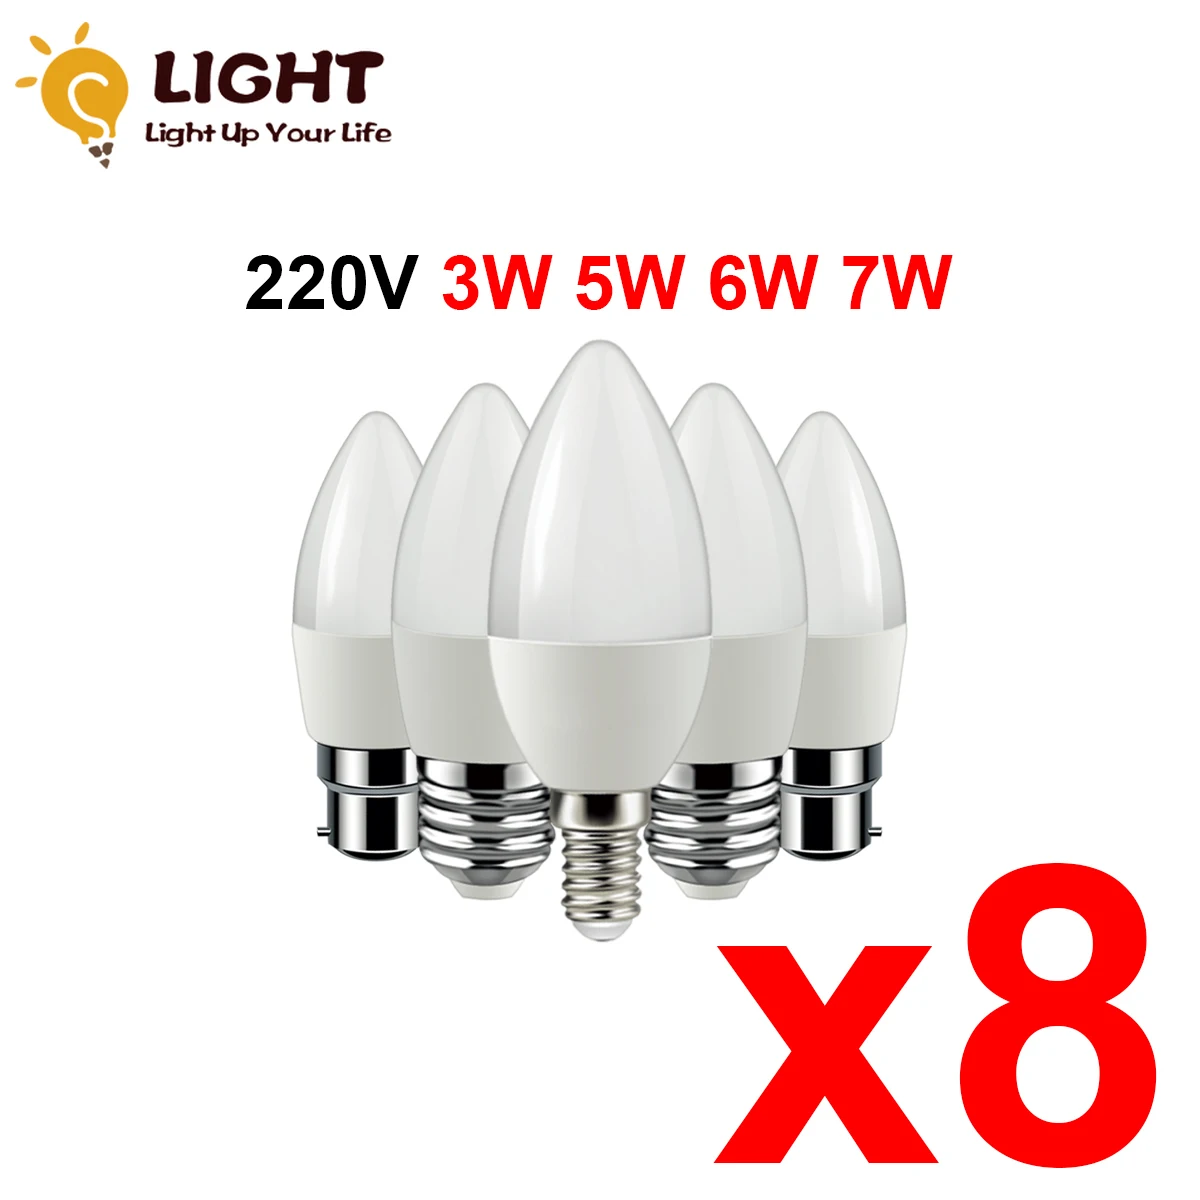 

8pcs/lot Led Candle Bulb C37 3w 5w 6w 7w Warm White Cold White Day Light B22 E14 220v-240v 6000k For Home Decoration Lamp